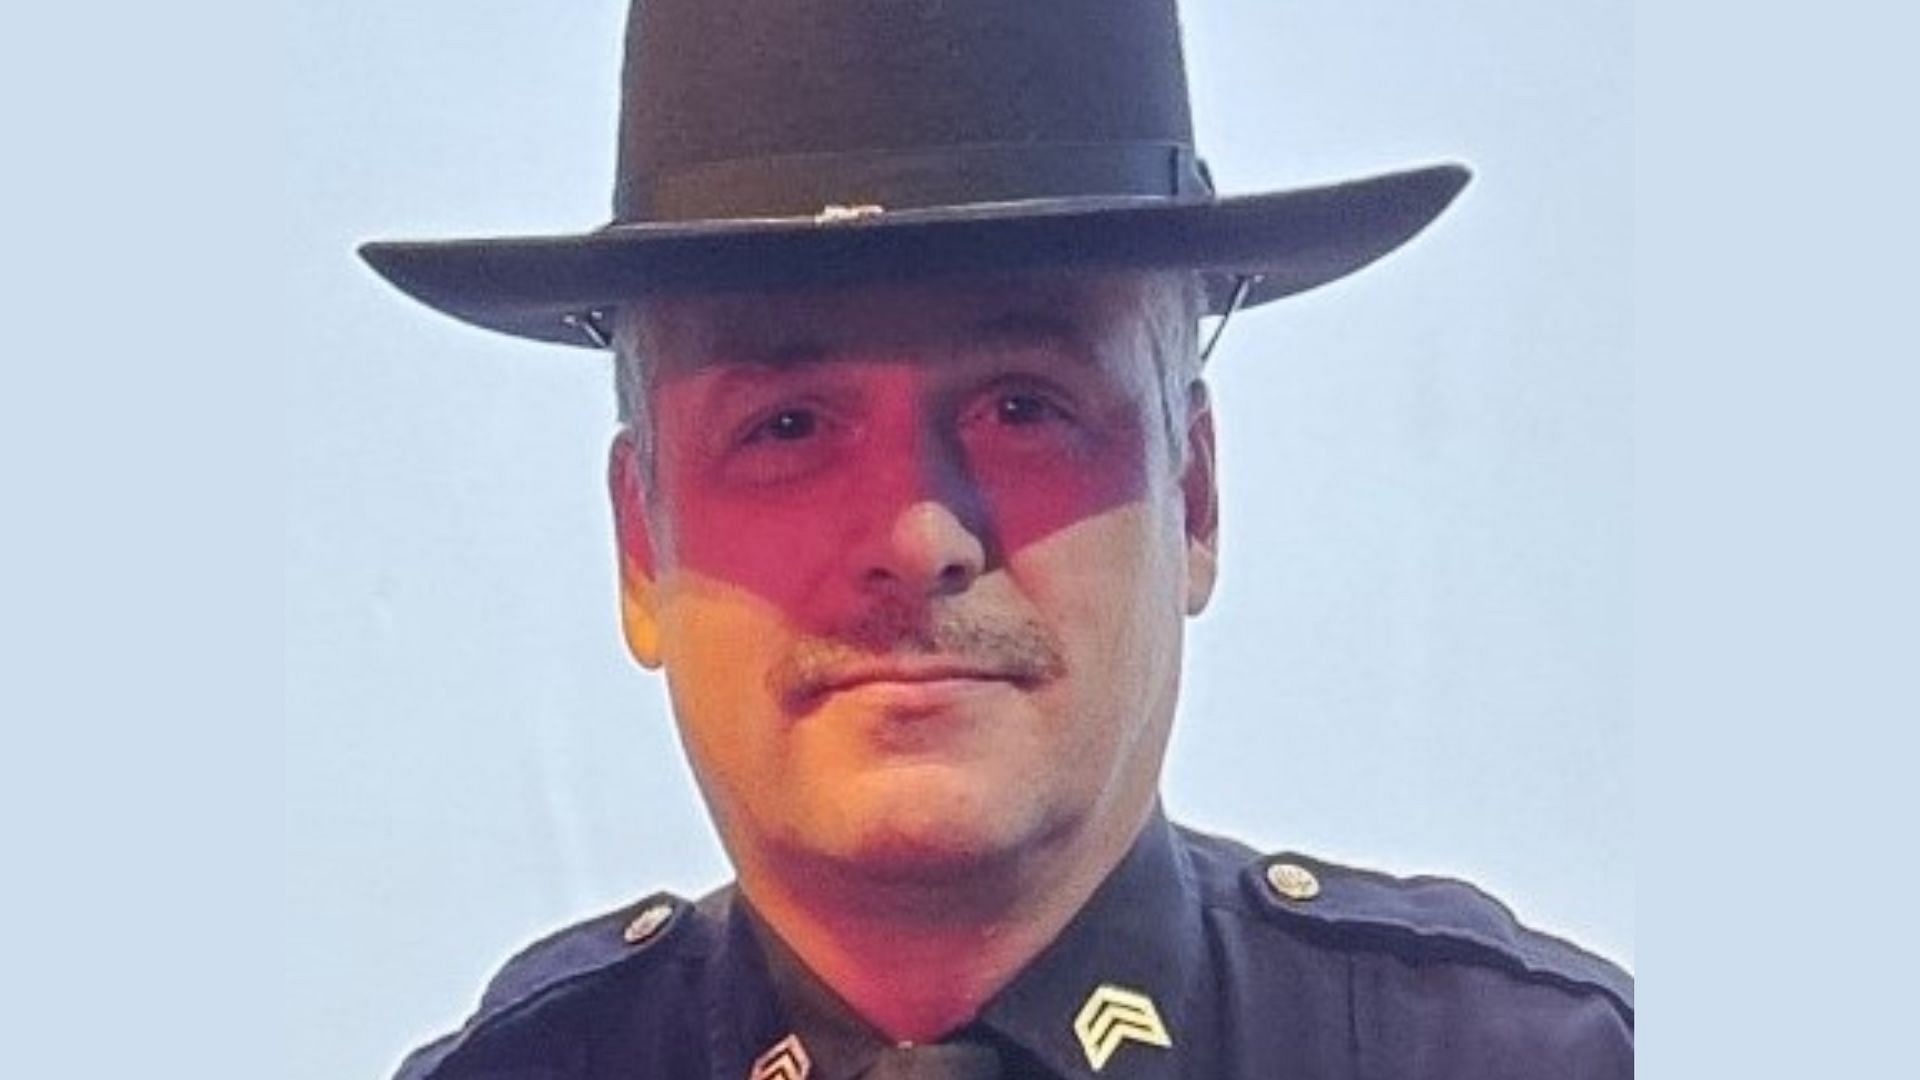 Thomas Sanfratello (Image via Genesee County Sheriff